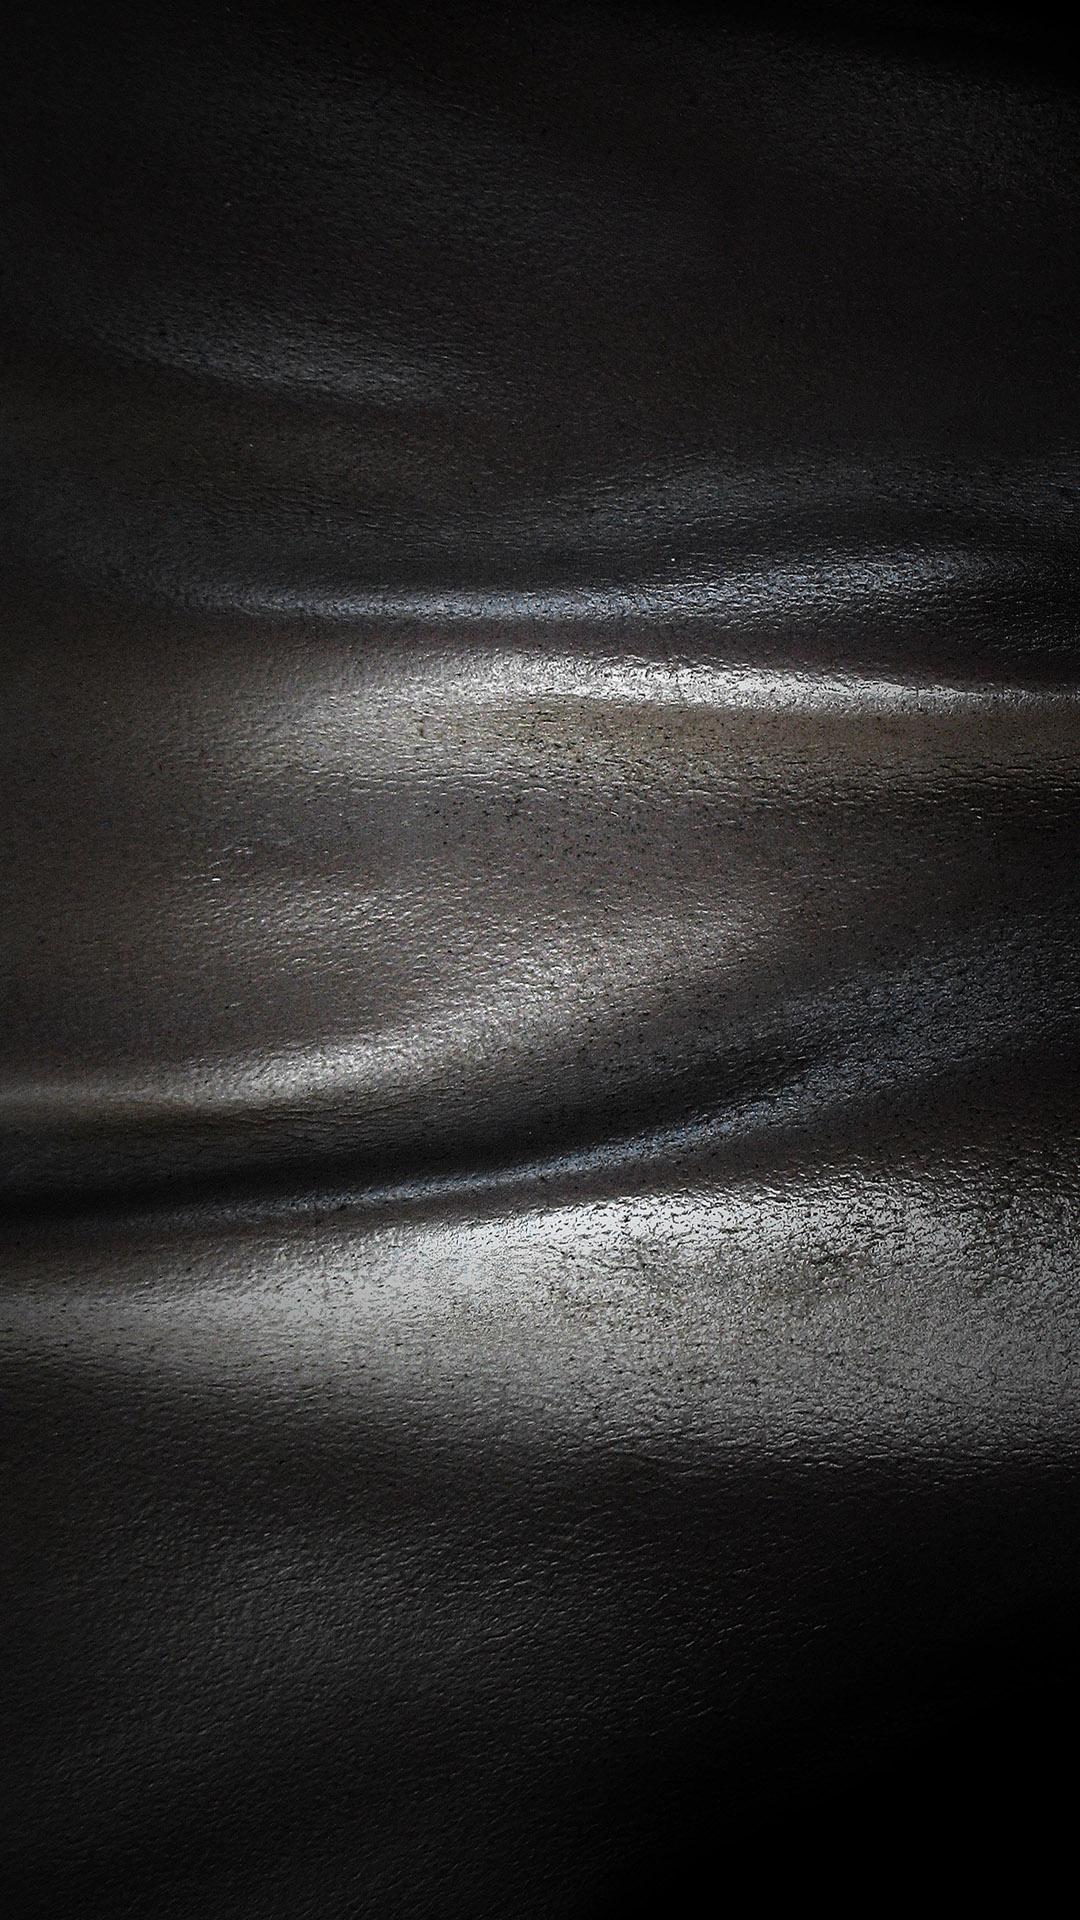 Samsung Galaxy Note 3 Wallpaper: Fresh black leather